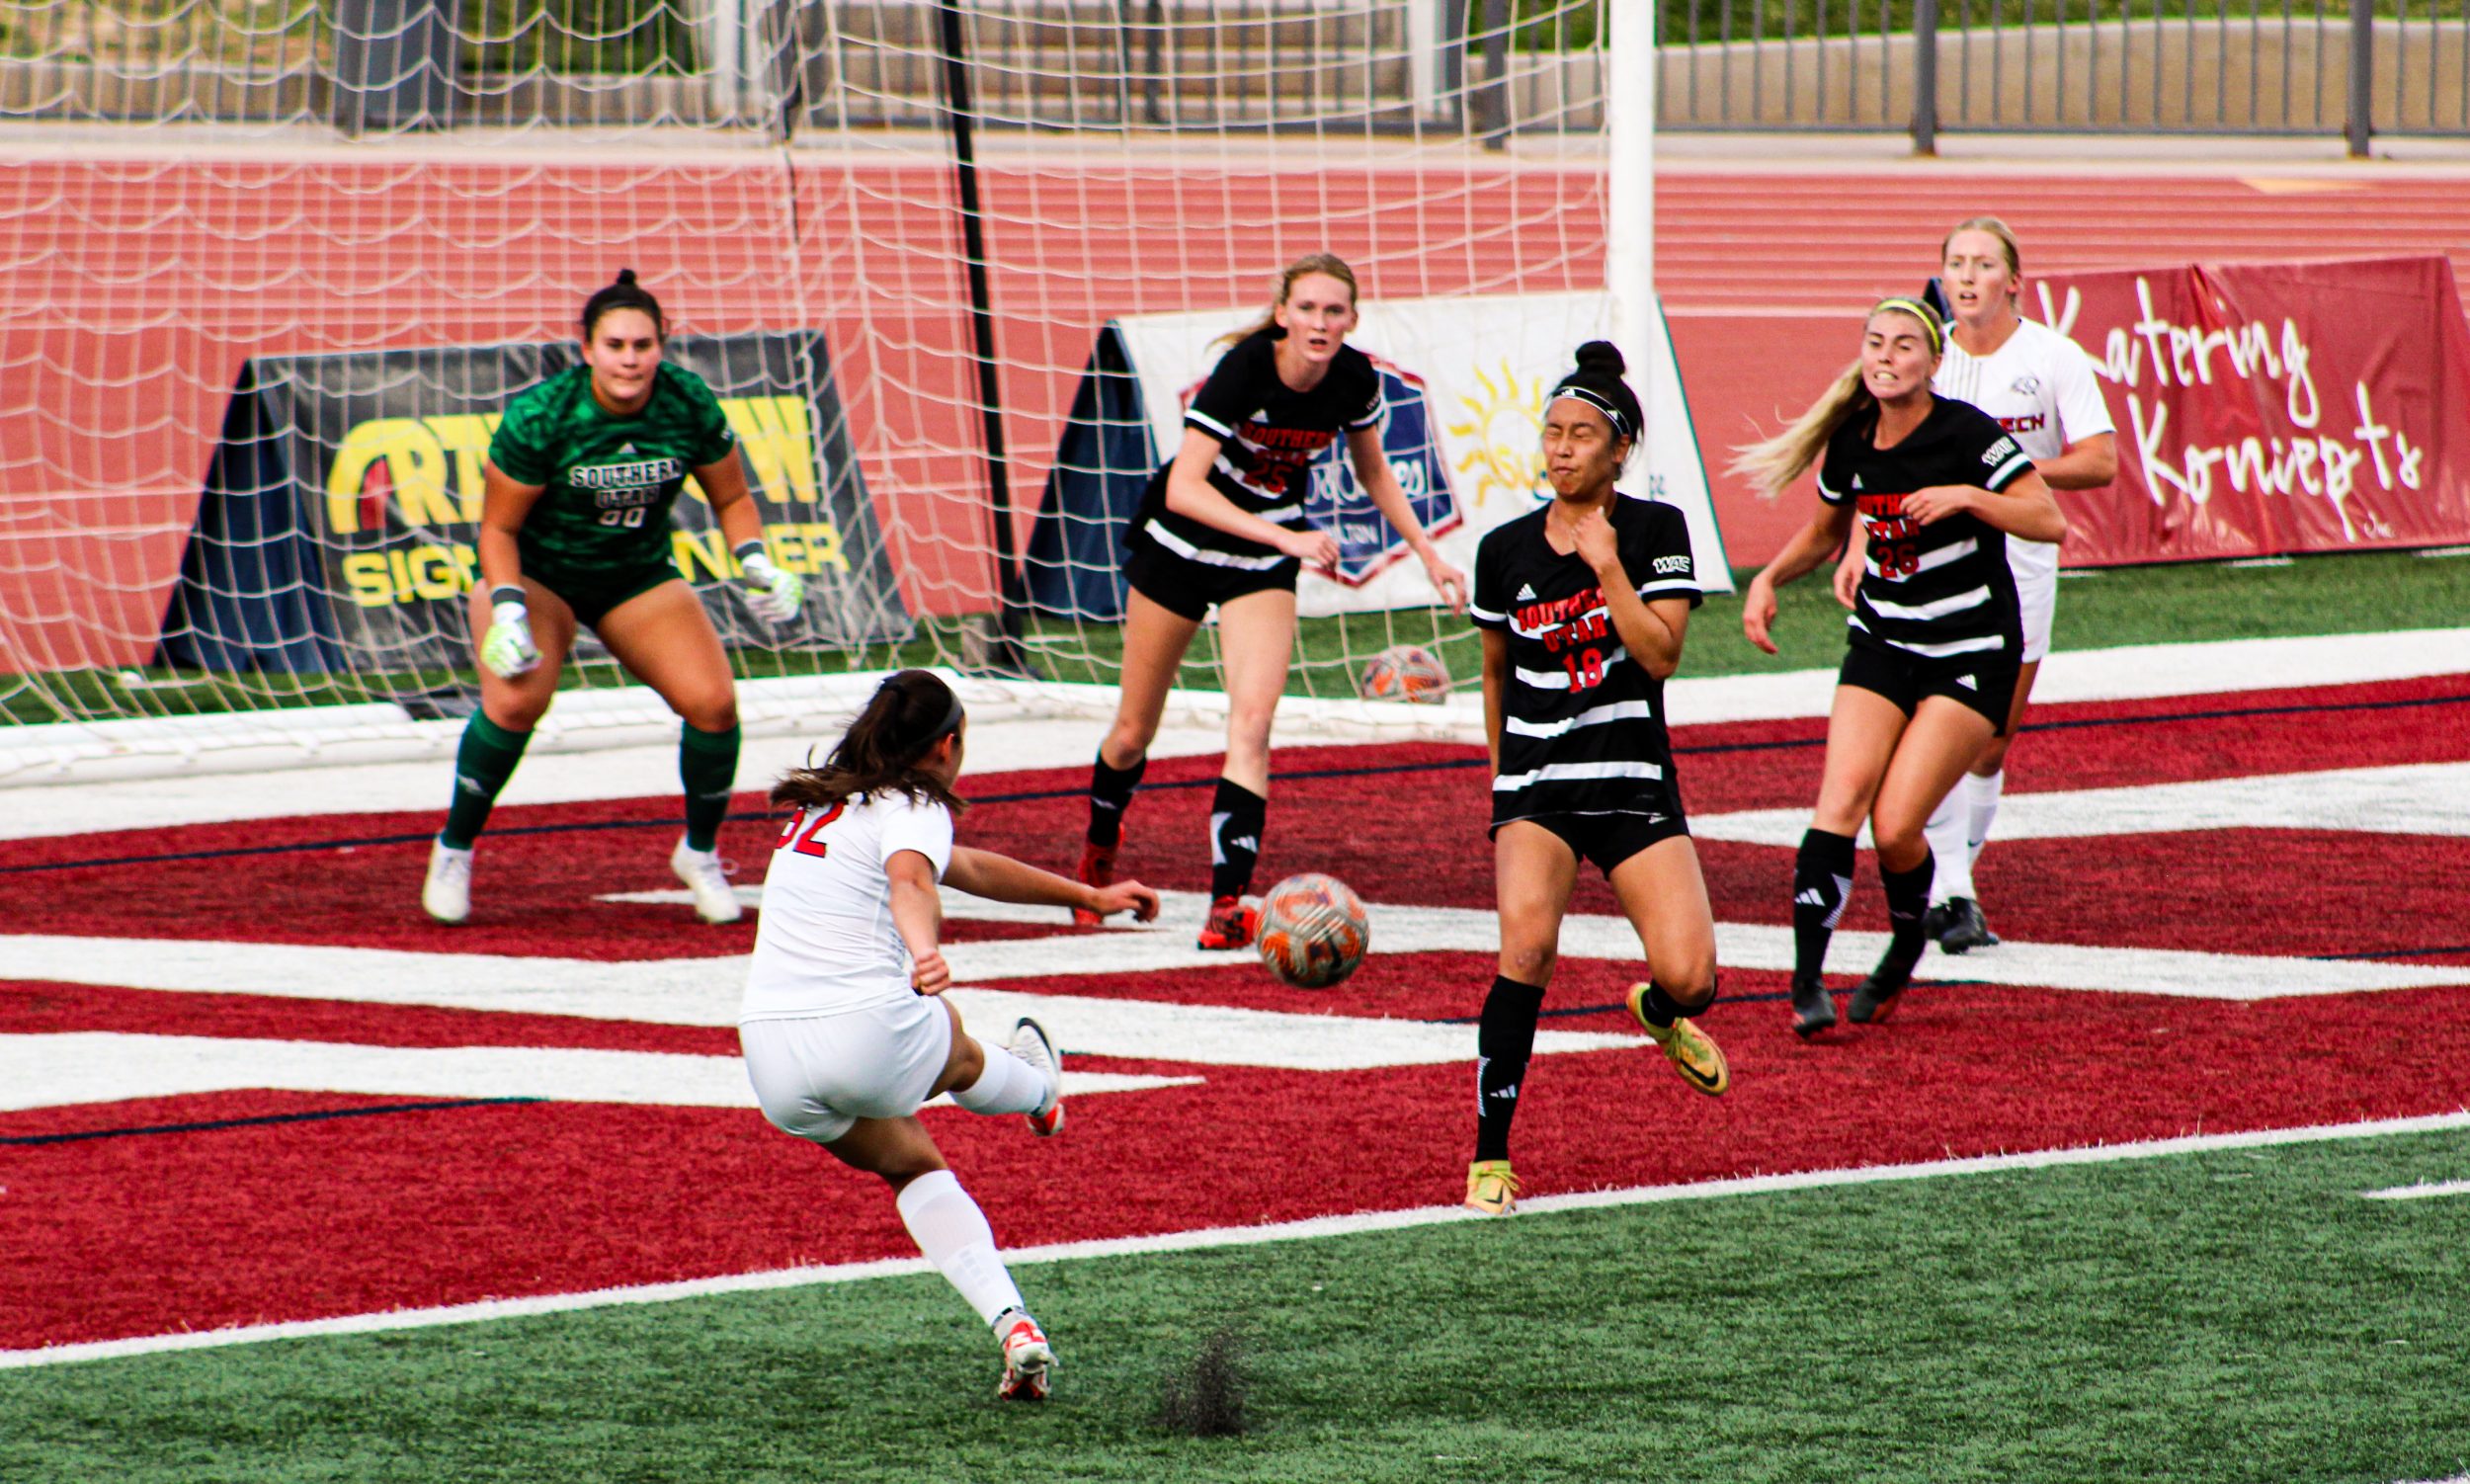 Utah Tech women’s soccer rivalry game against SUU ends in tie